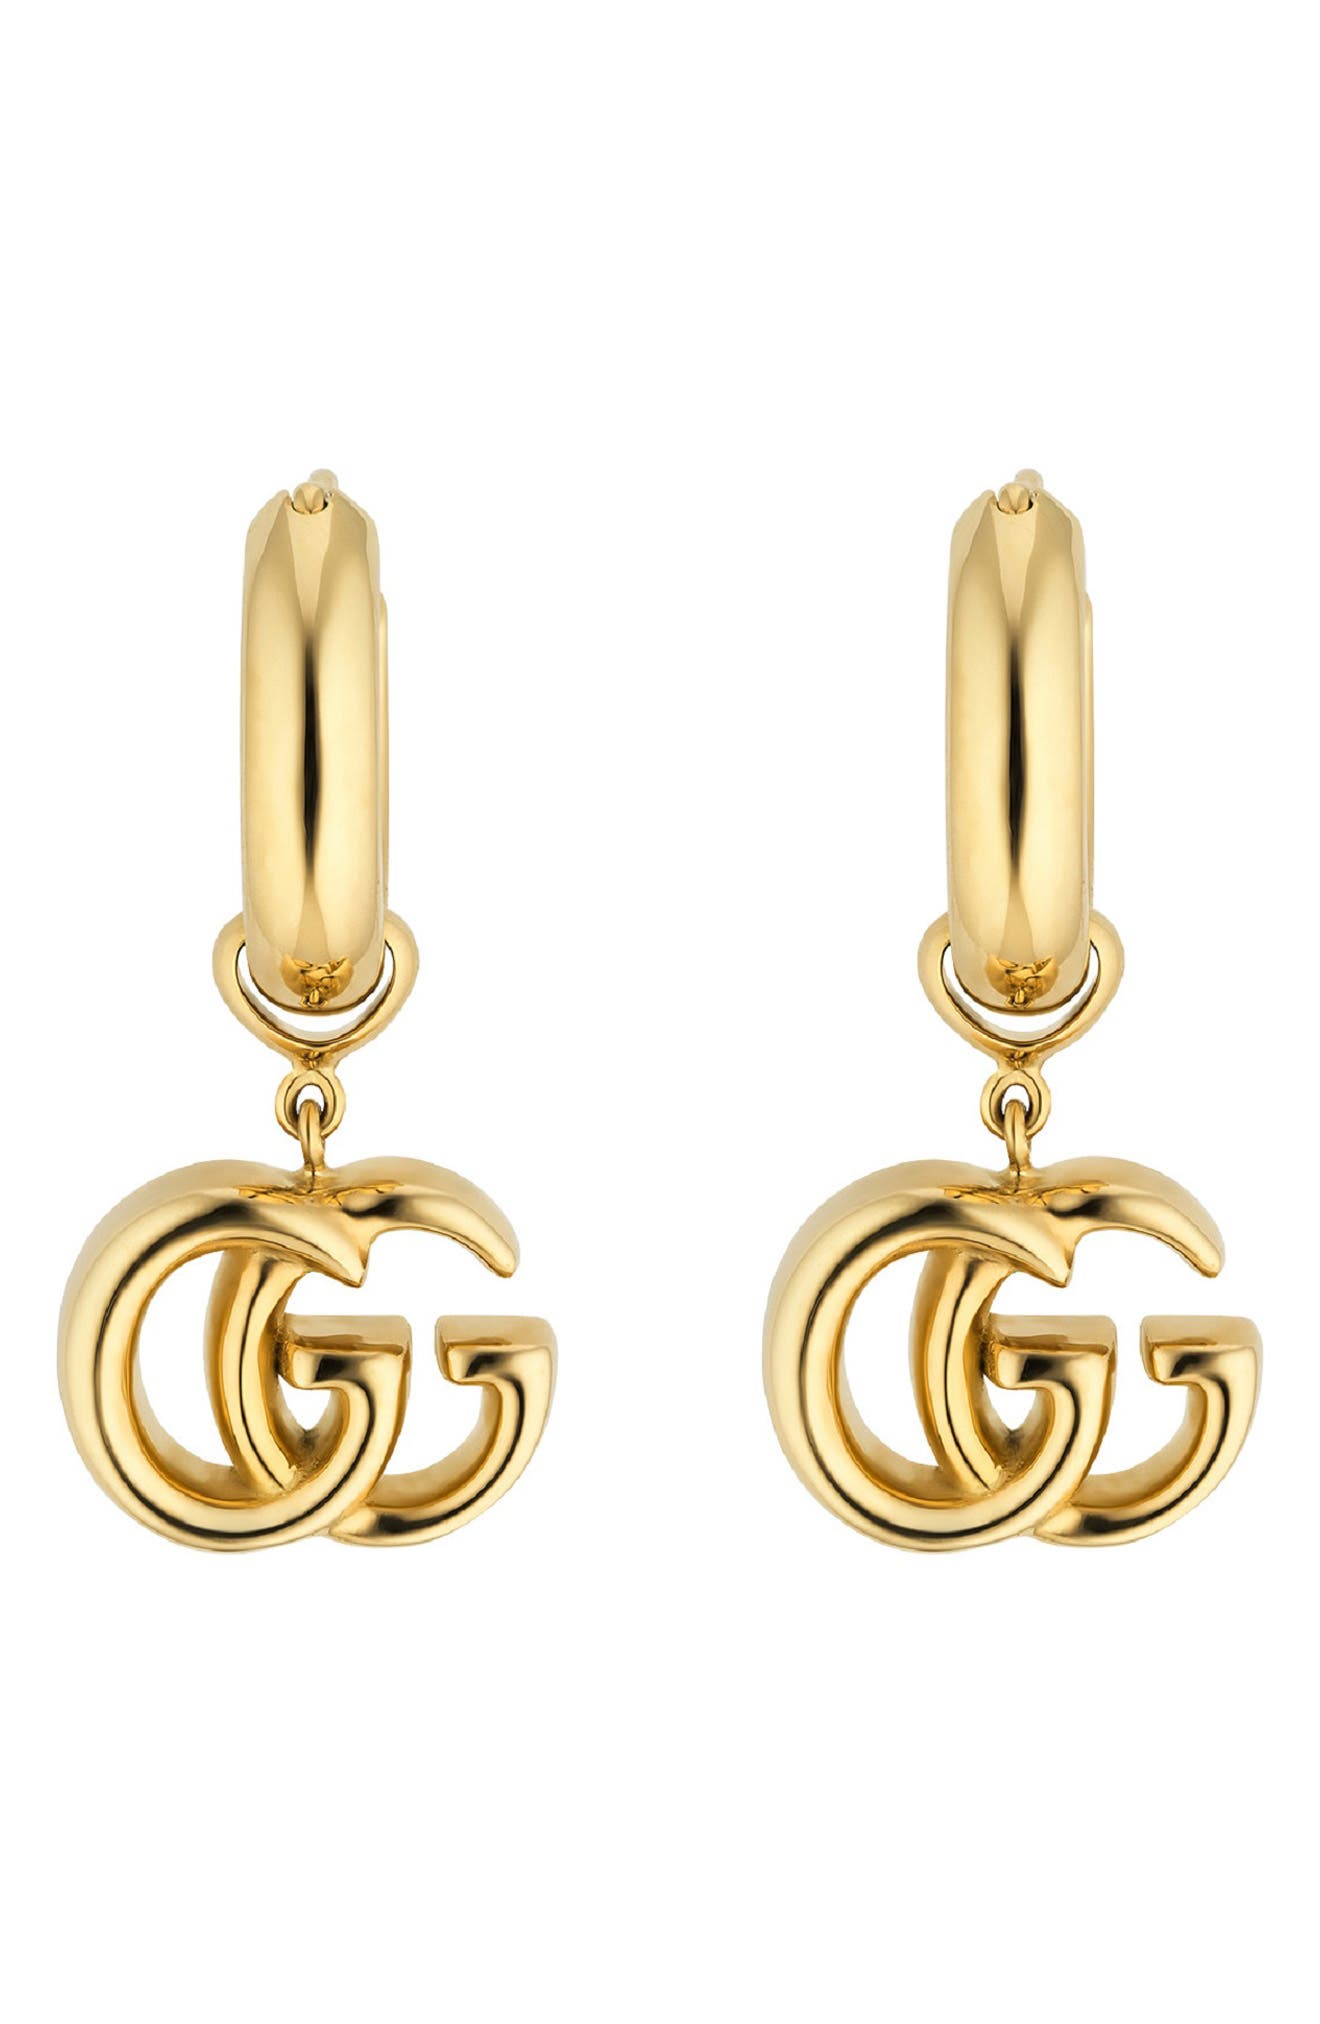 gucci inspired jewelry